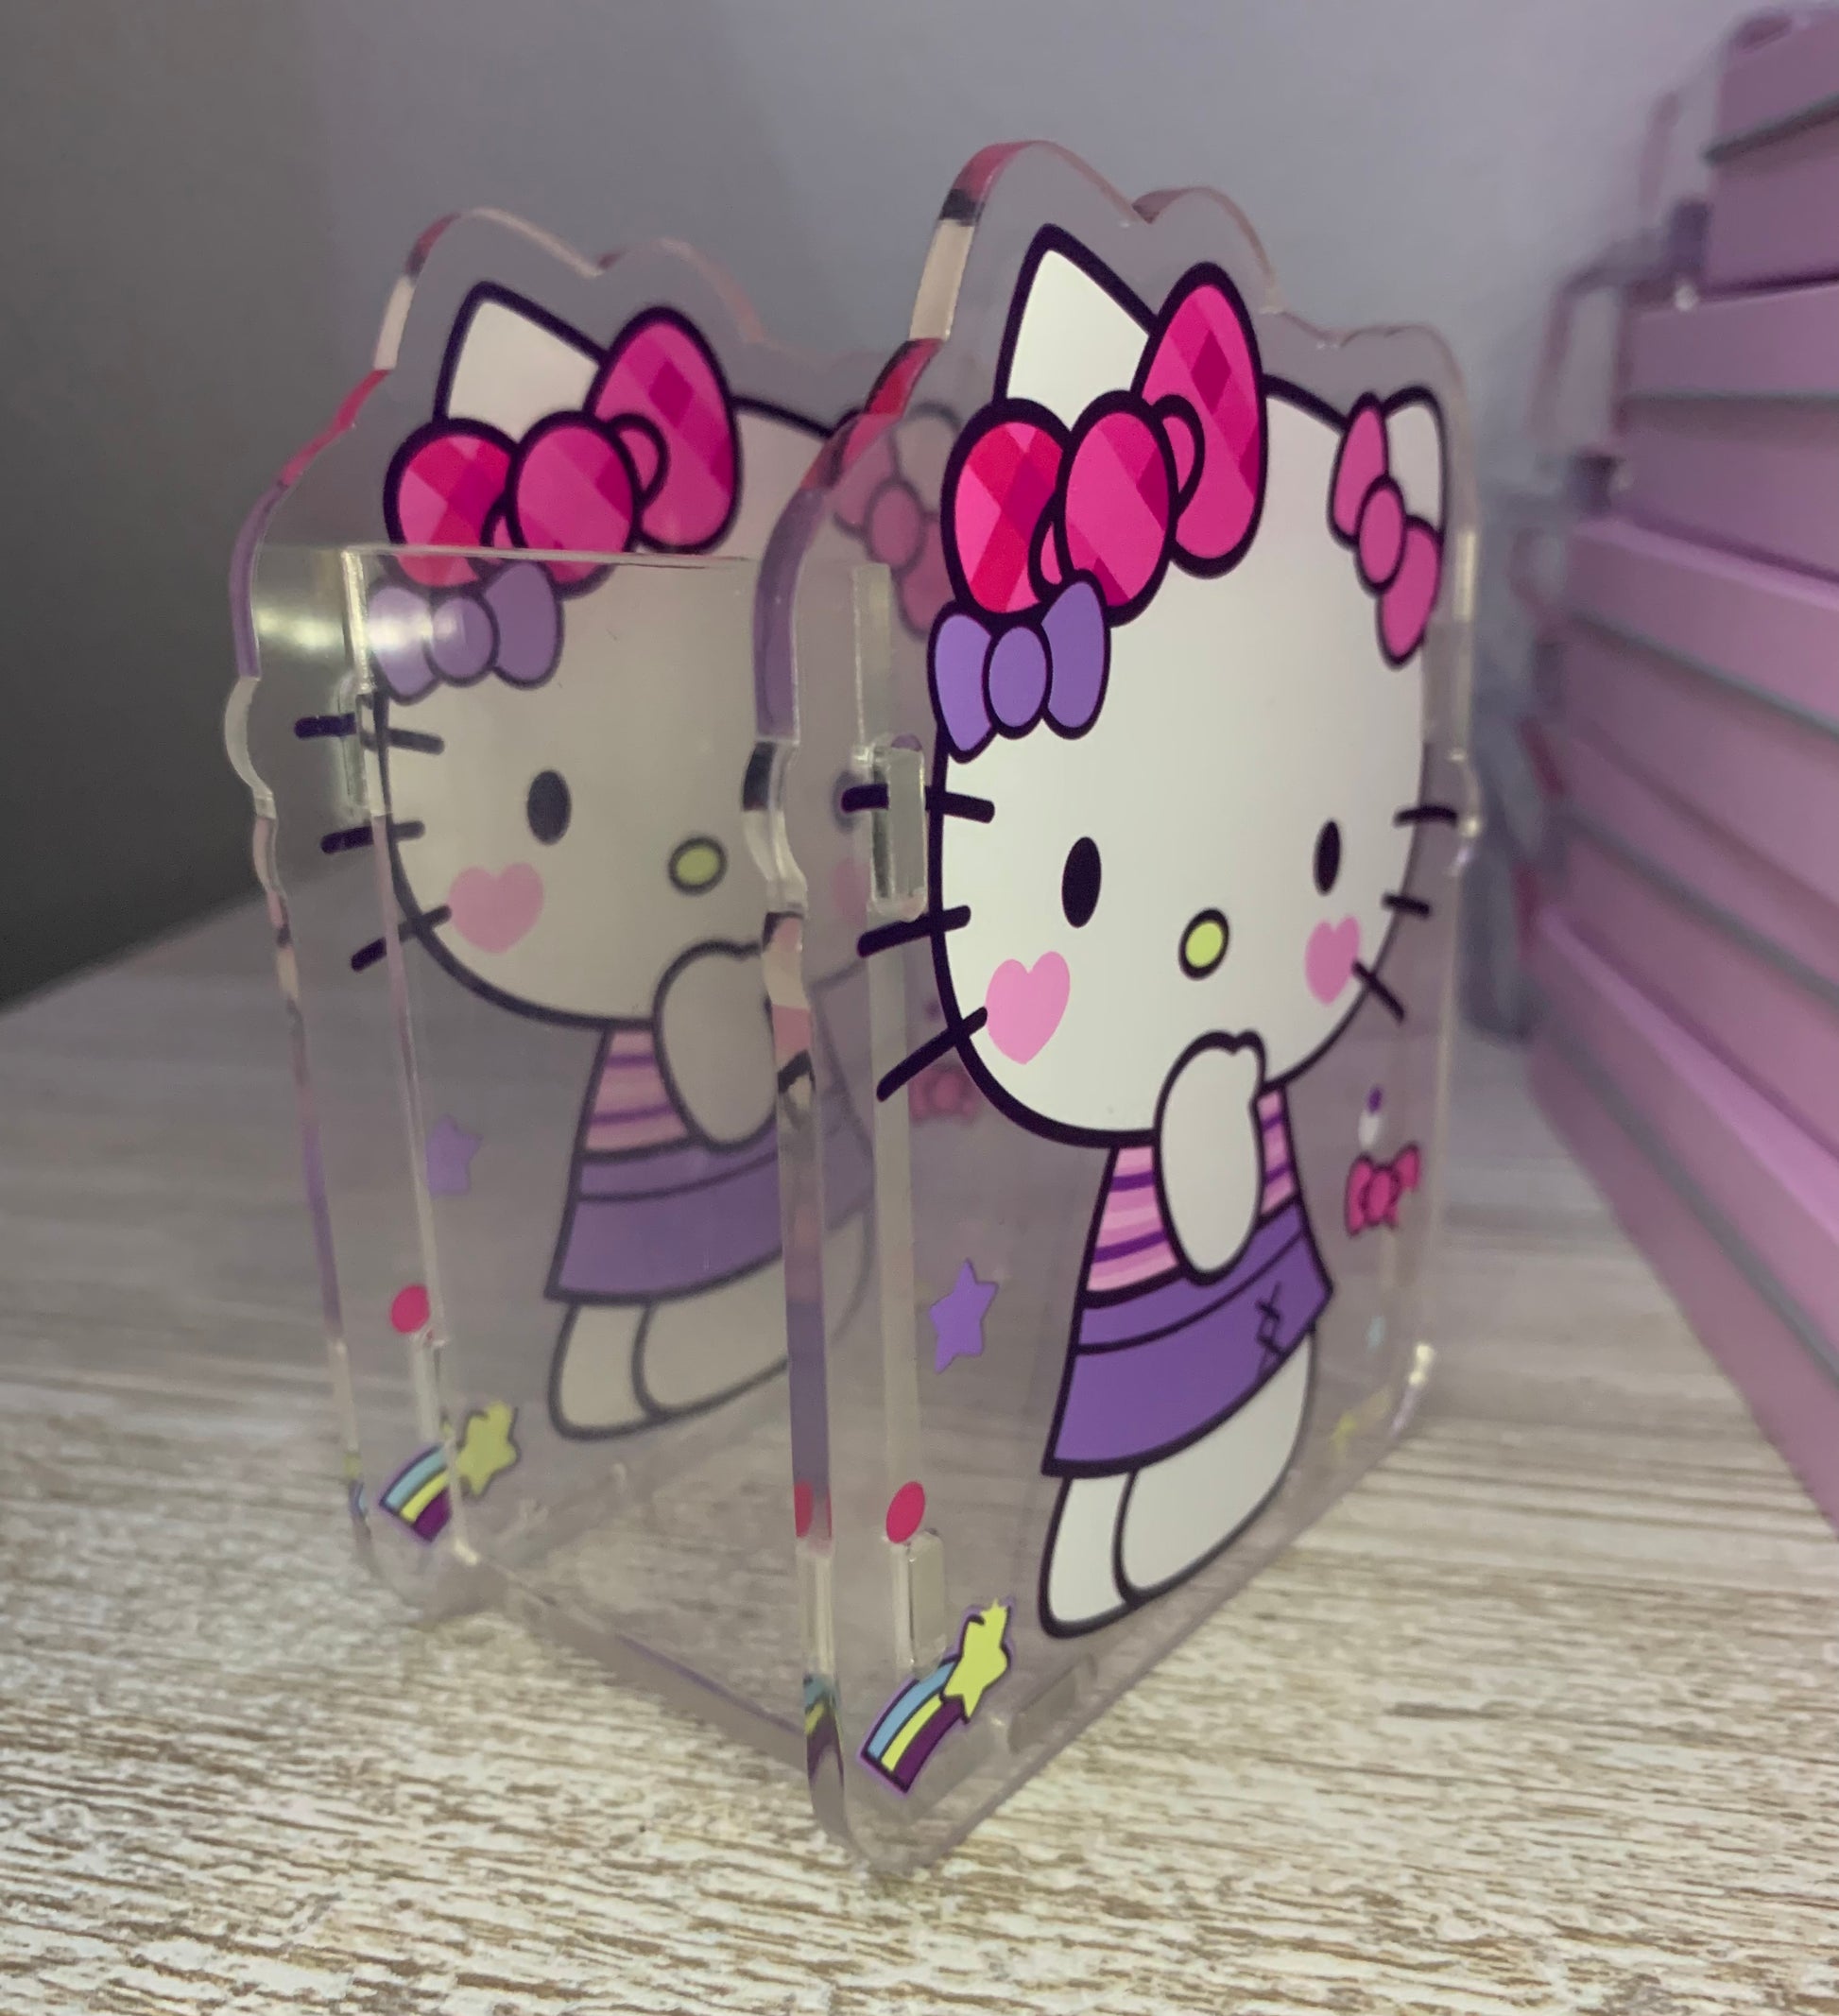 Hello Kitty Pen Holder Desktop Storage Detachable Cartoon Holiday Gift  Large Capacity Makeup Brush Box Learning